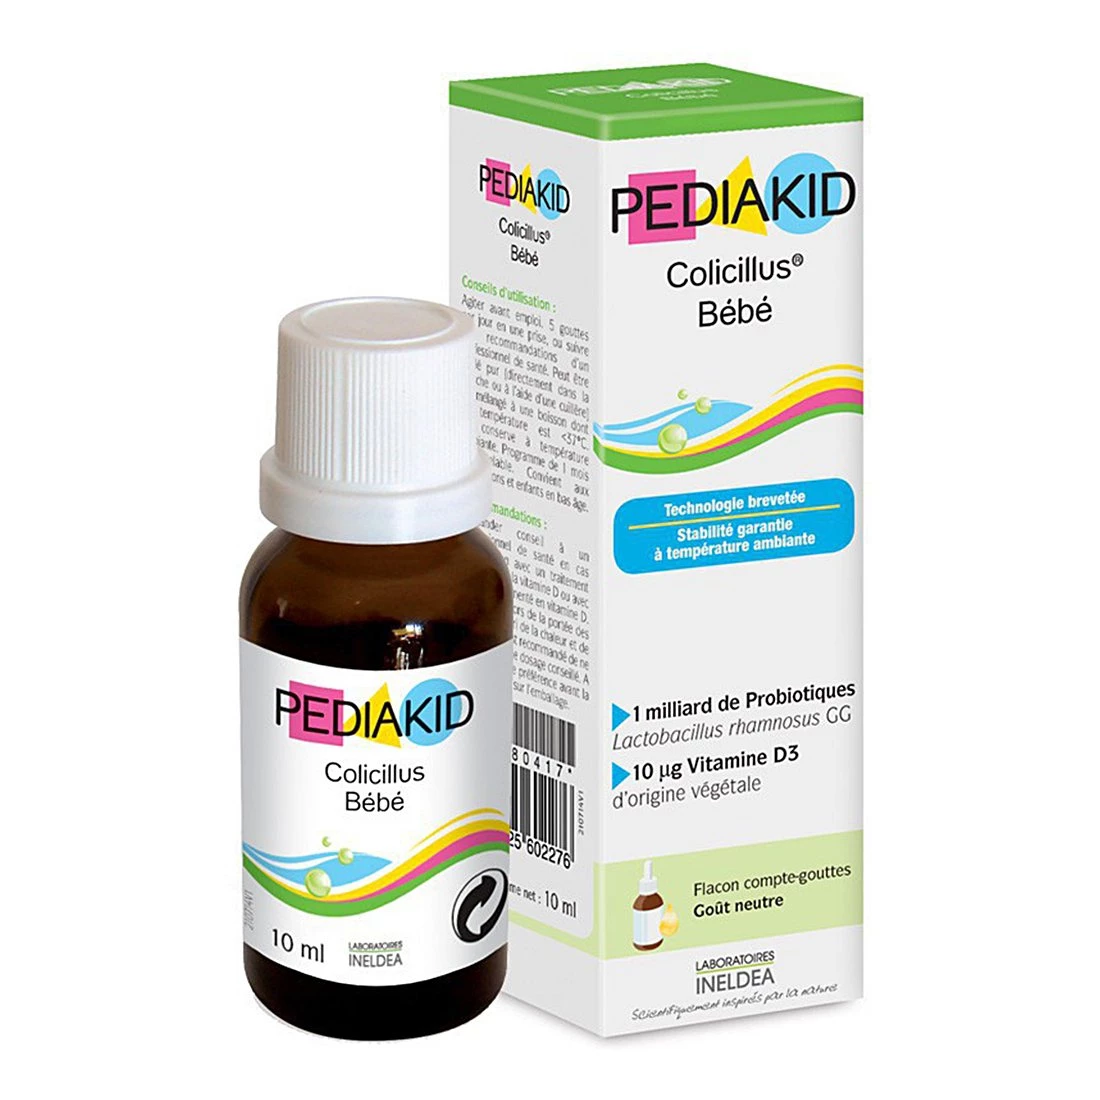 Pediakid Colicillus BeBe - Bổ sung lợi khuẩn cho bé